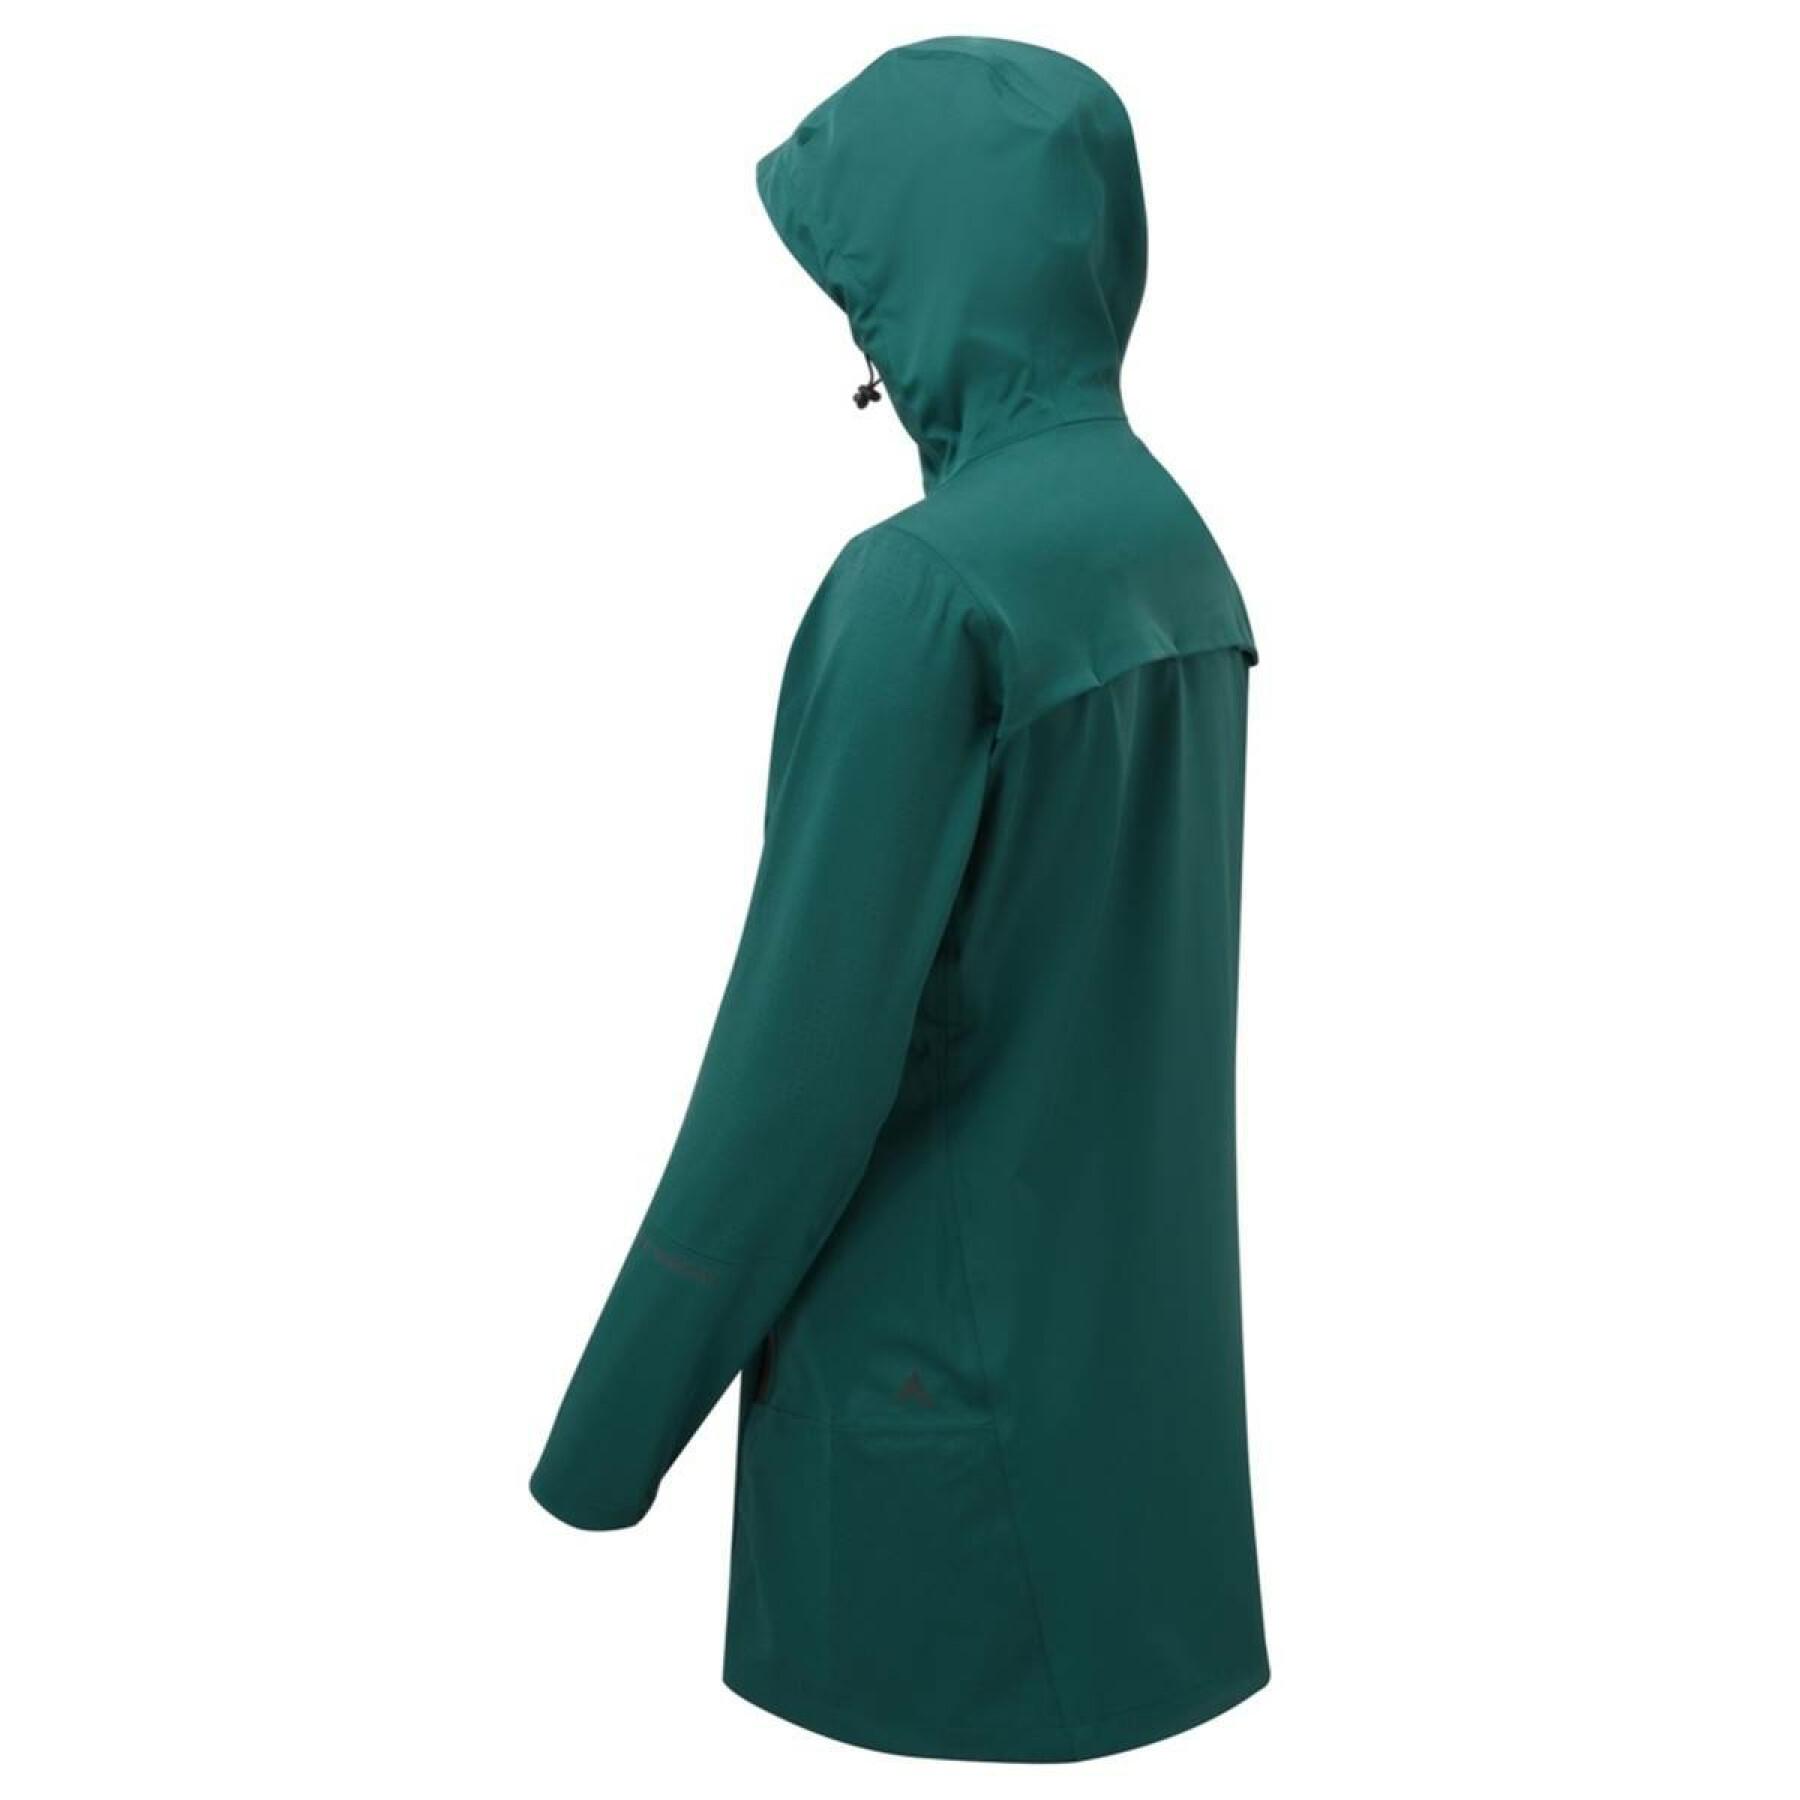 Women's waterproof jacket Altura Nightvision Zephyr